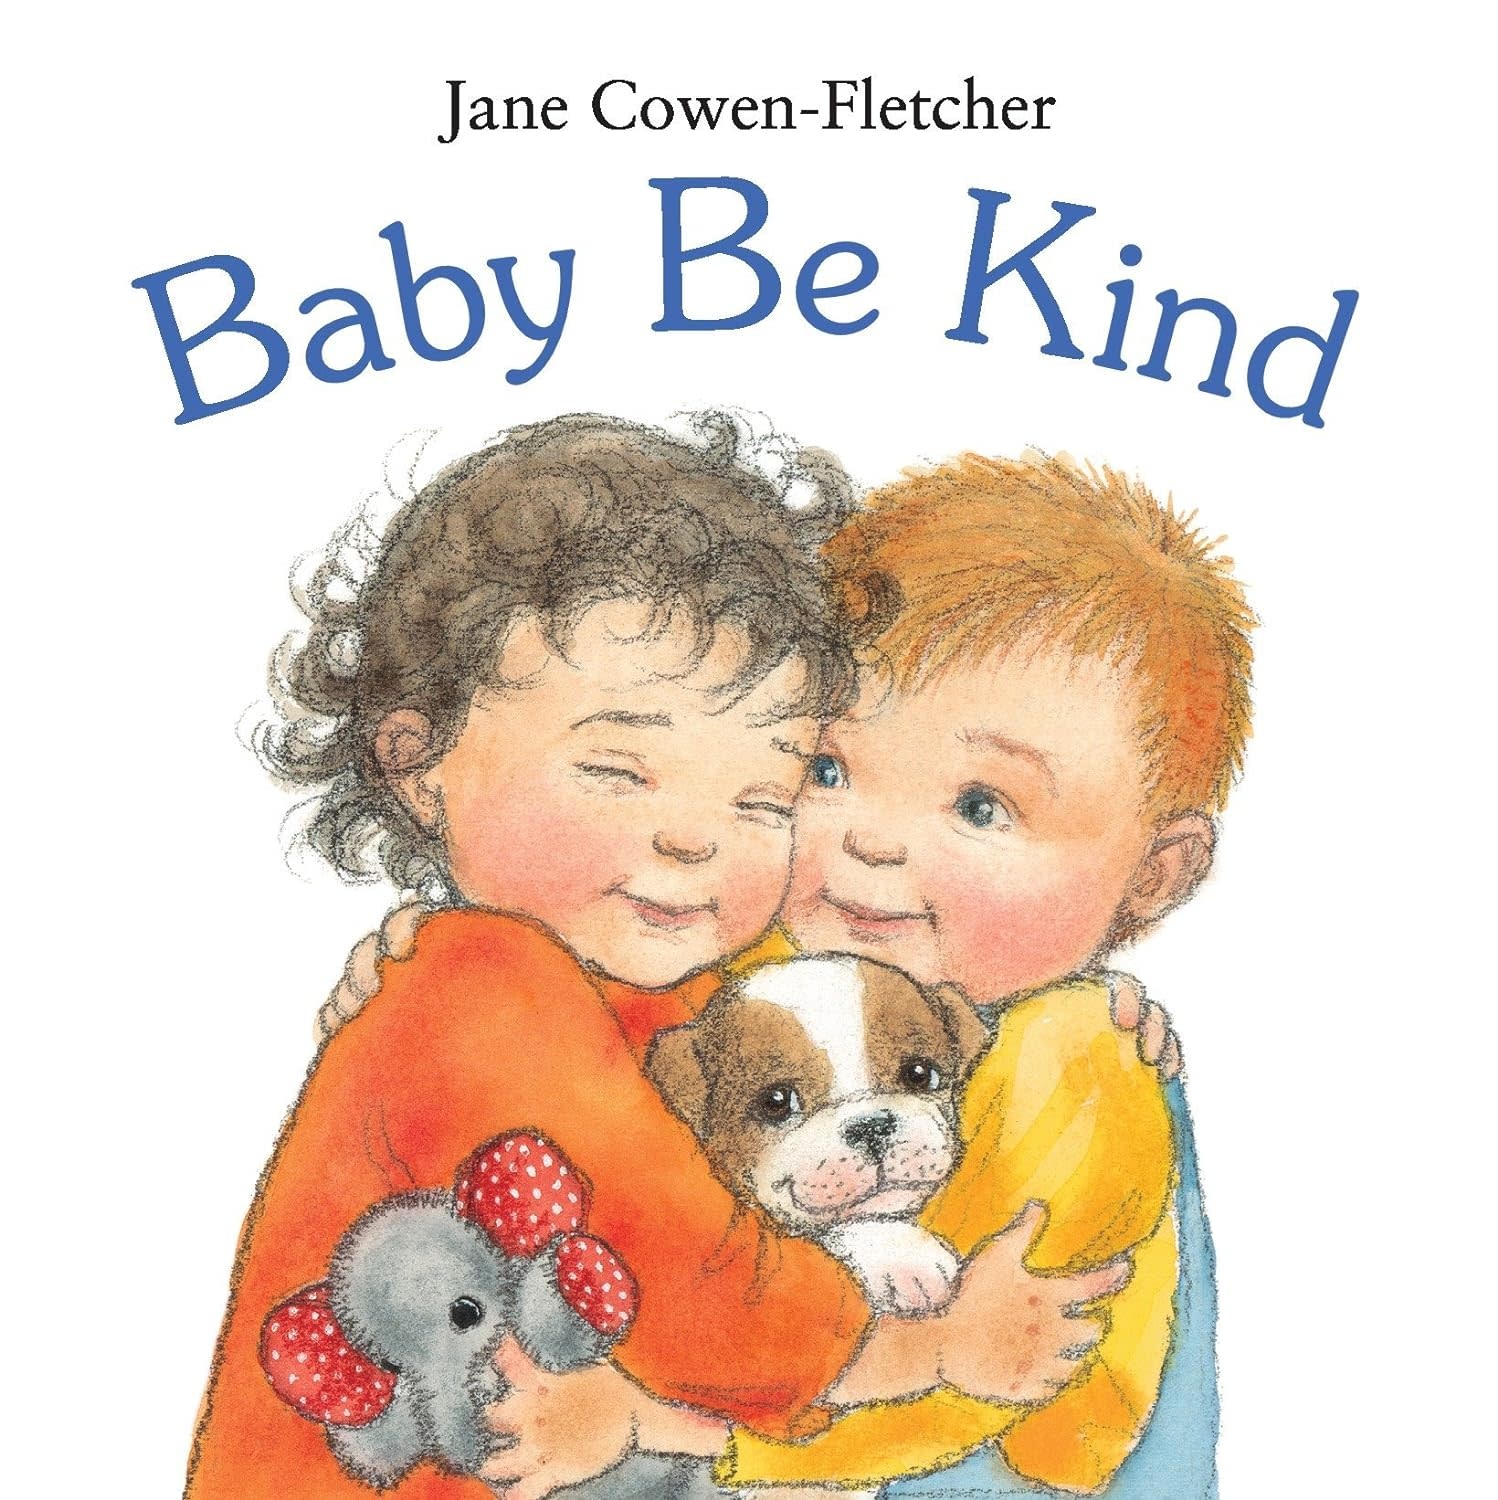 "Baby Be Kind" by Jane Cowen-Fletcher